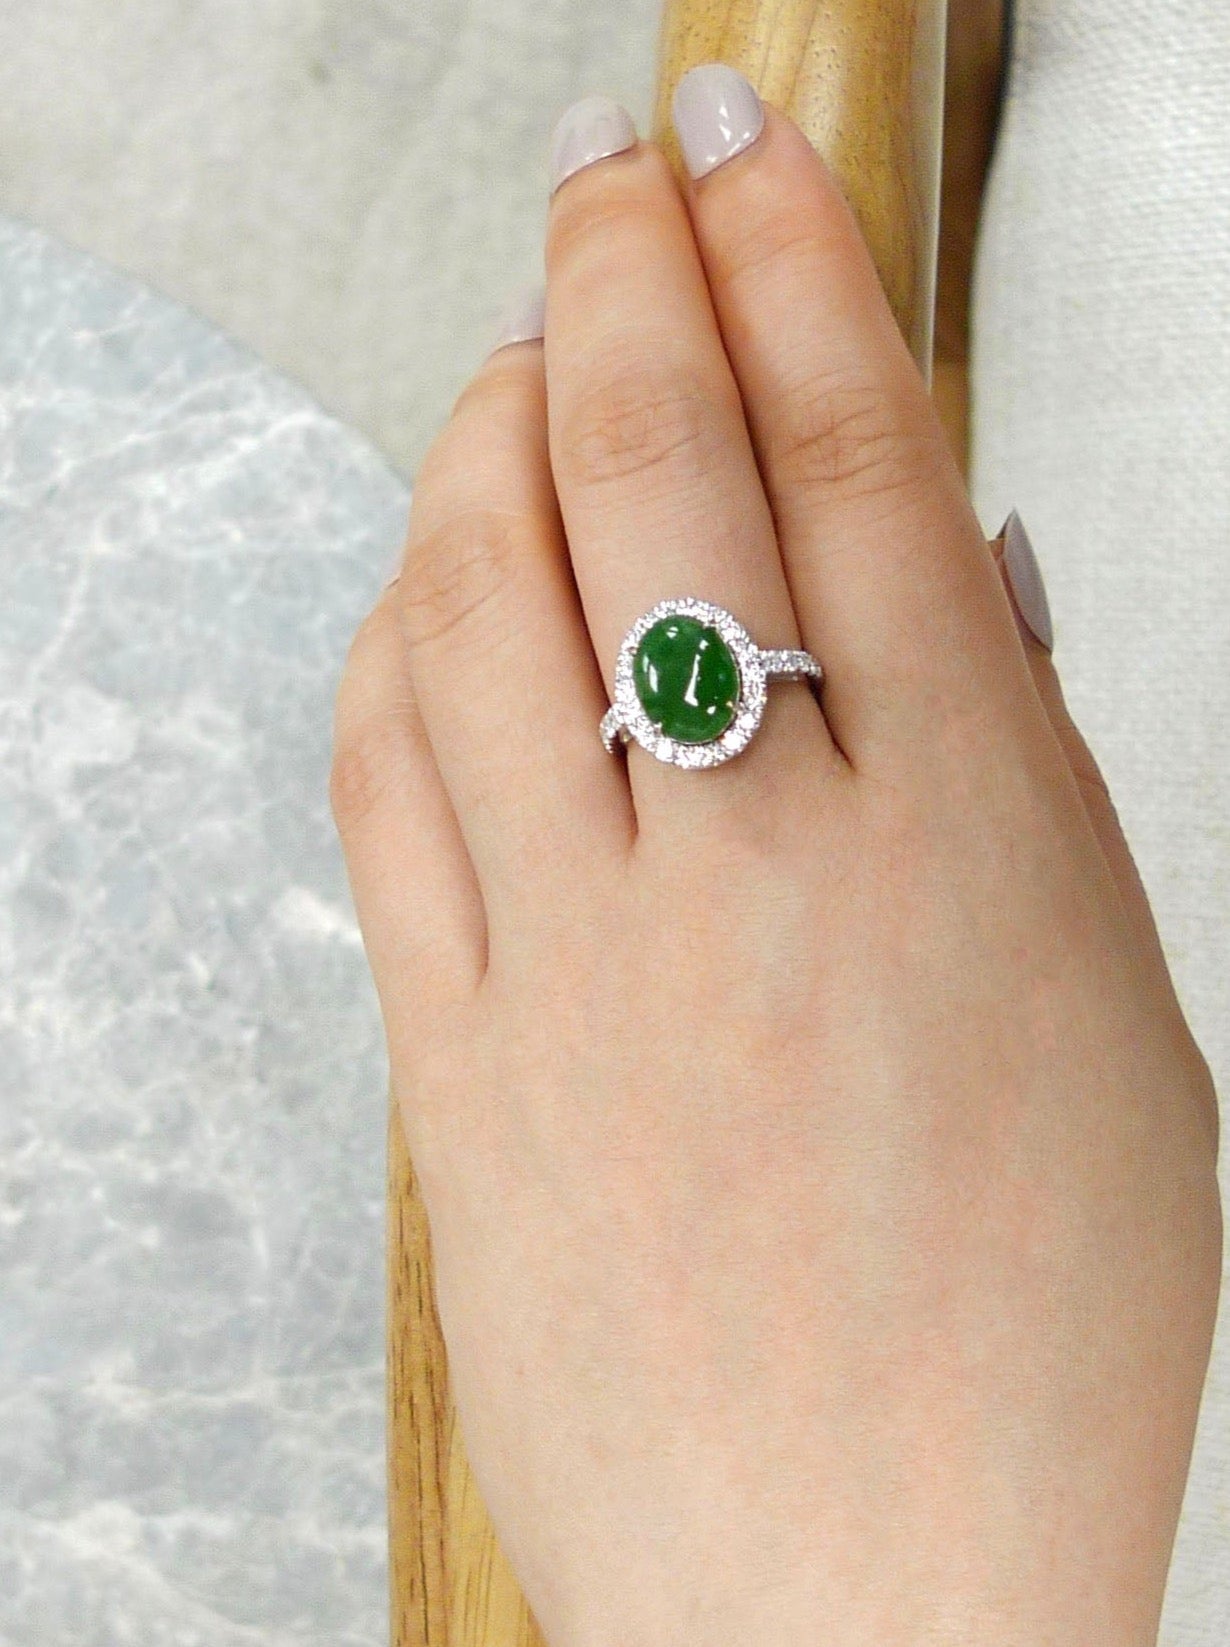 Engagement rings | Engagement ring types, Diamond rings design, Favorite  engagement rings